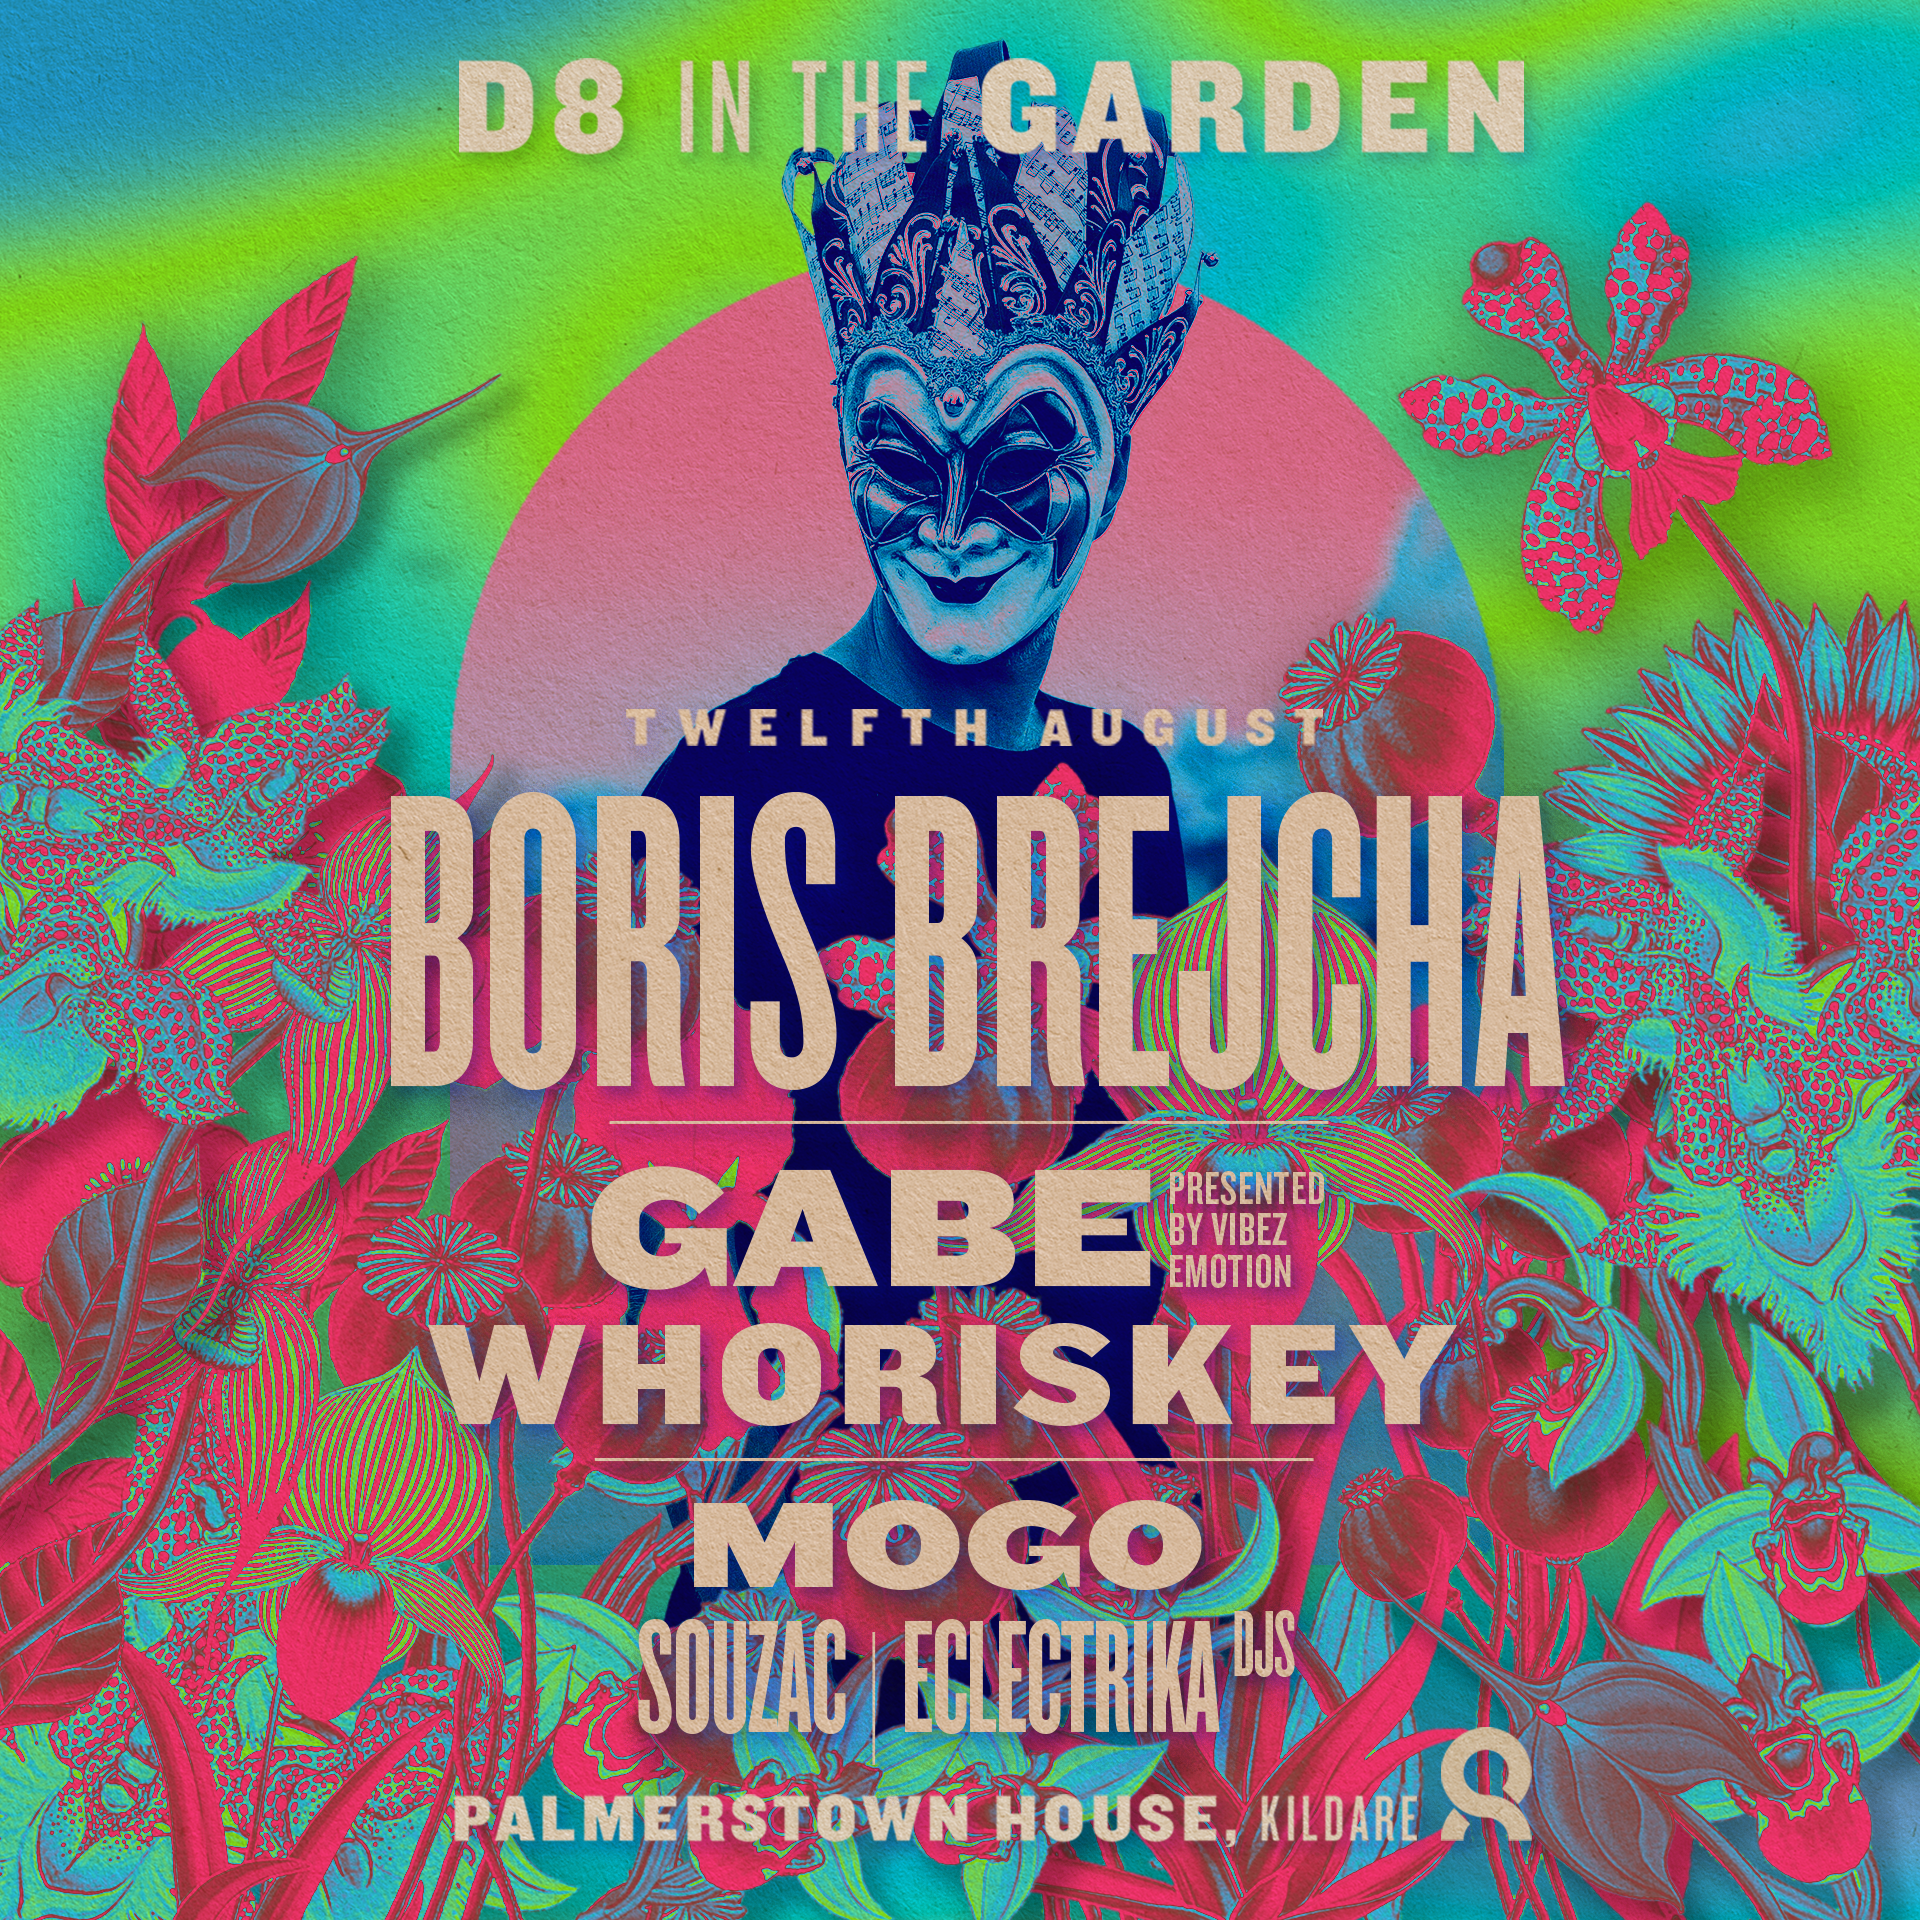 D8 In The Garden - Boris Brejcha - Página trasera